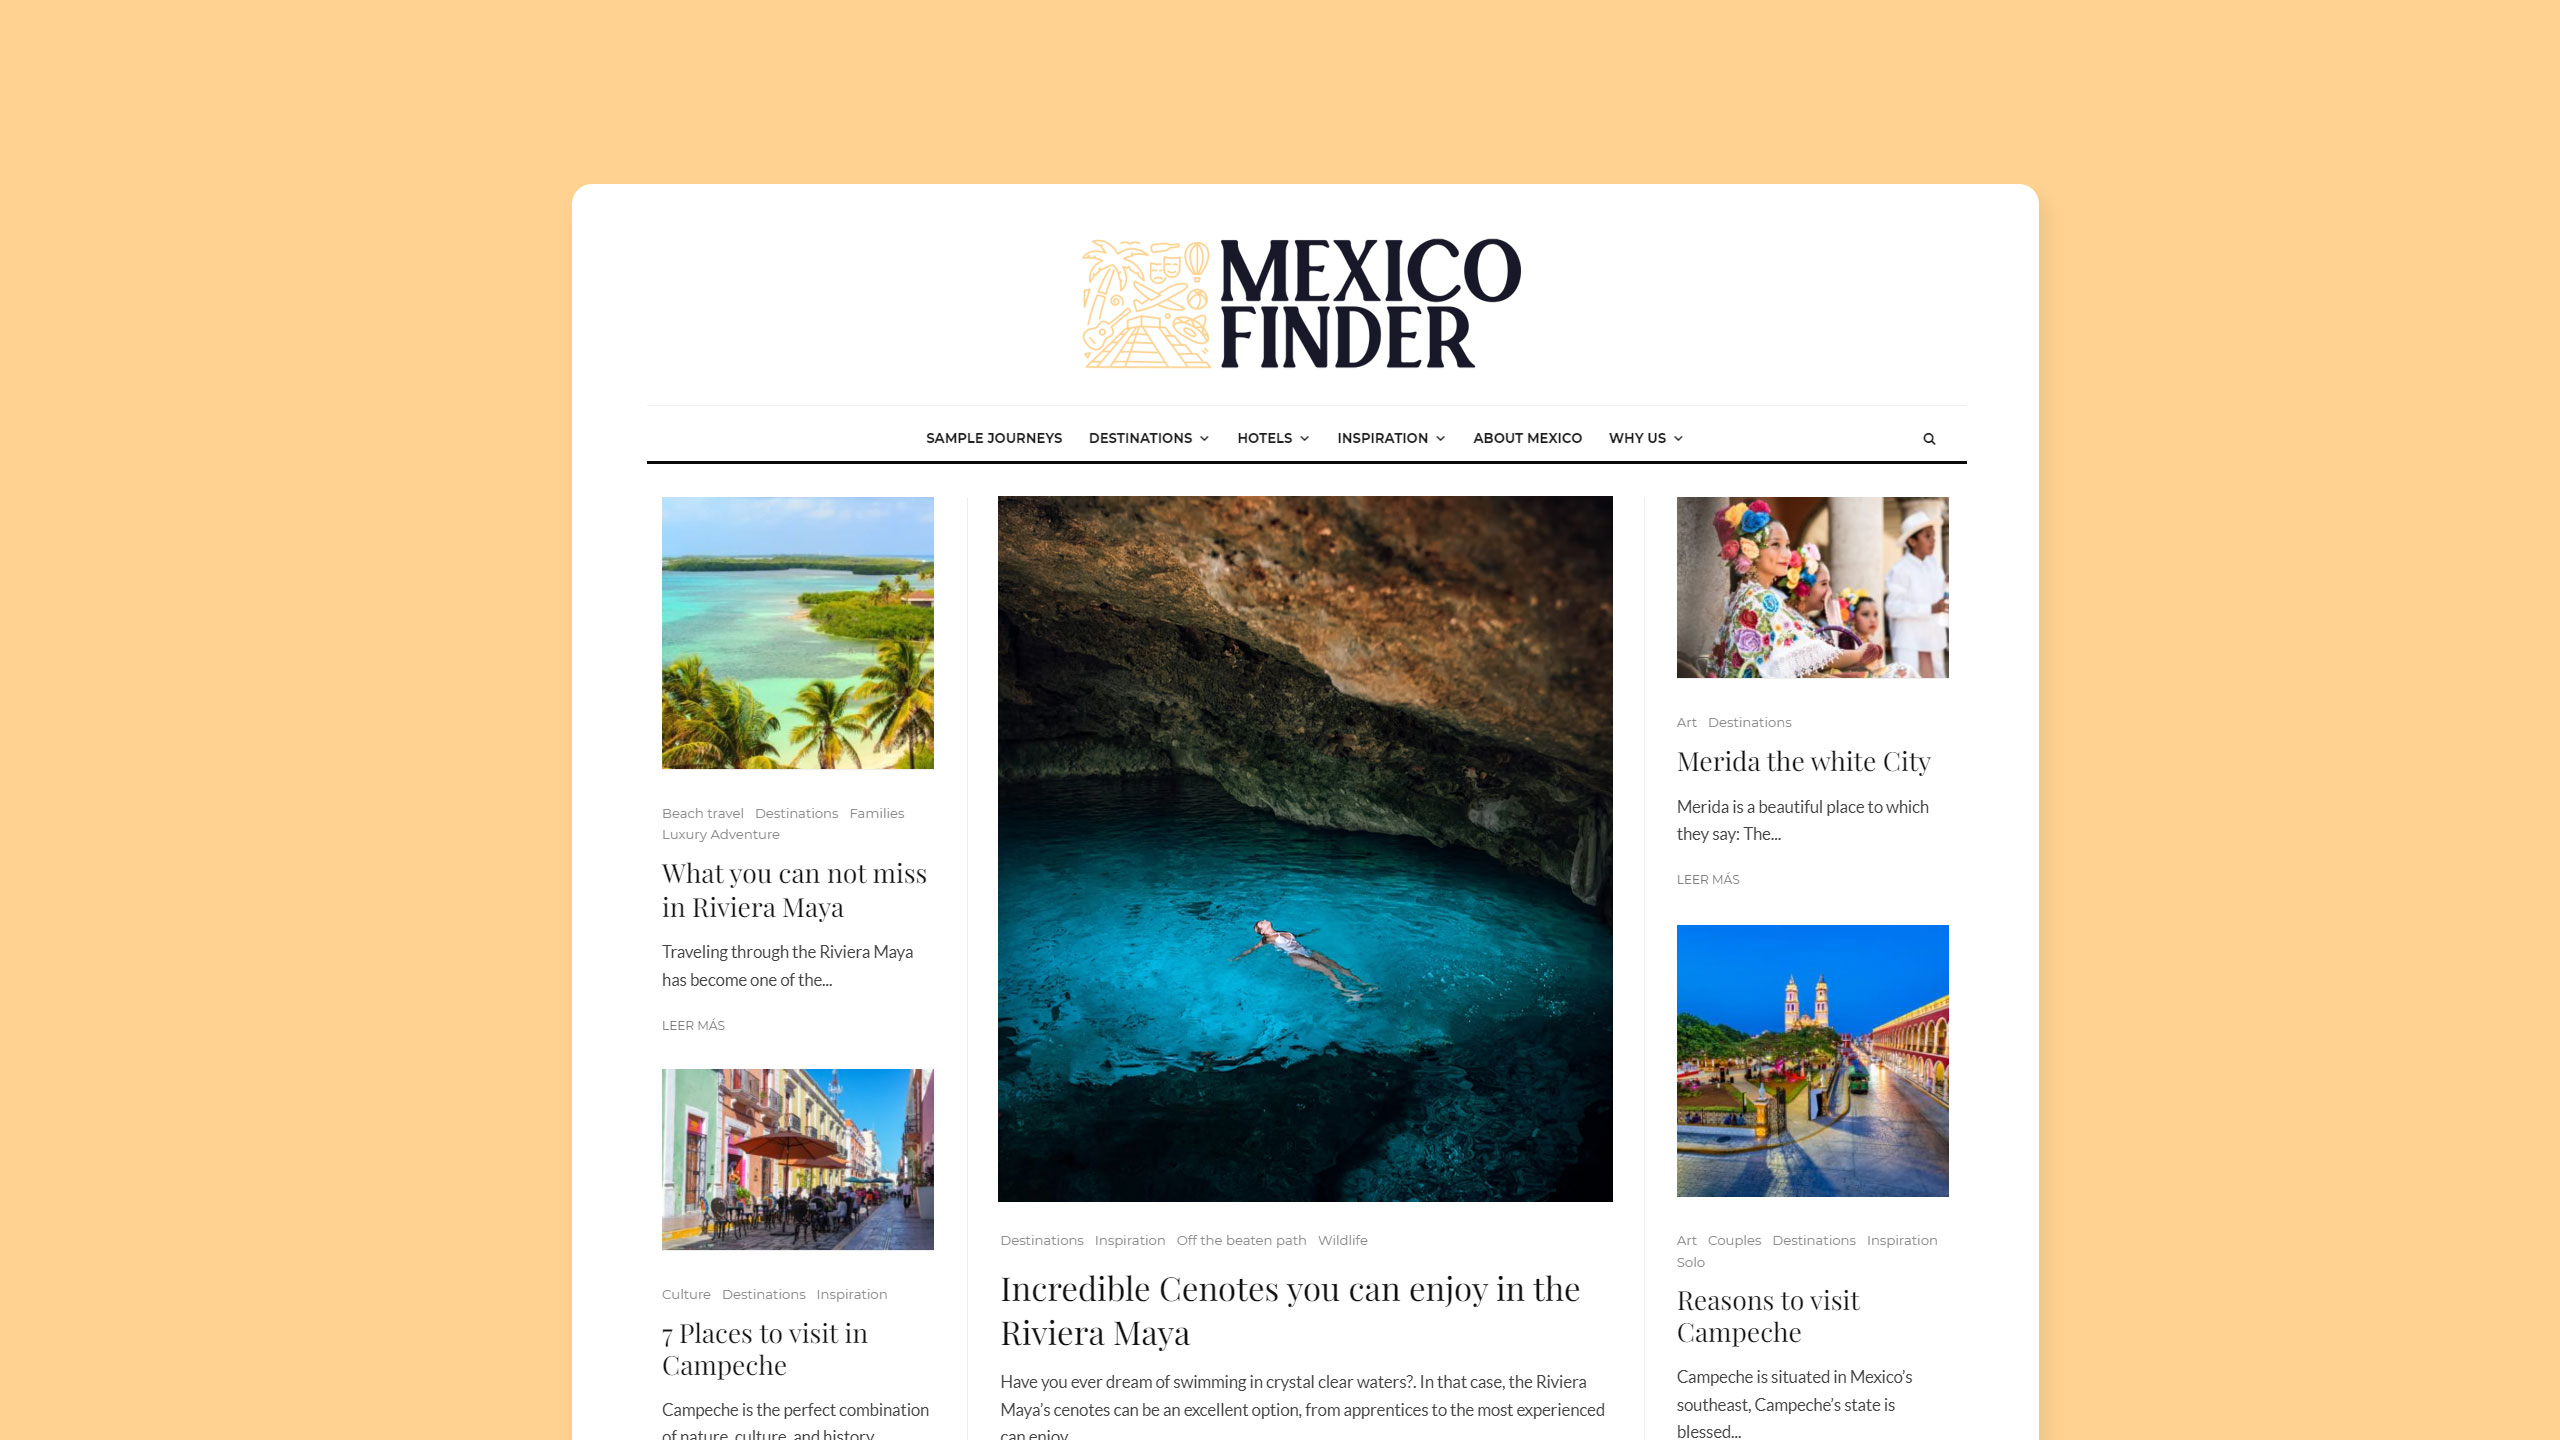 BOOM-agencia-digital-branding-website-case-study-mexicofinder-website-tours-vip